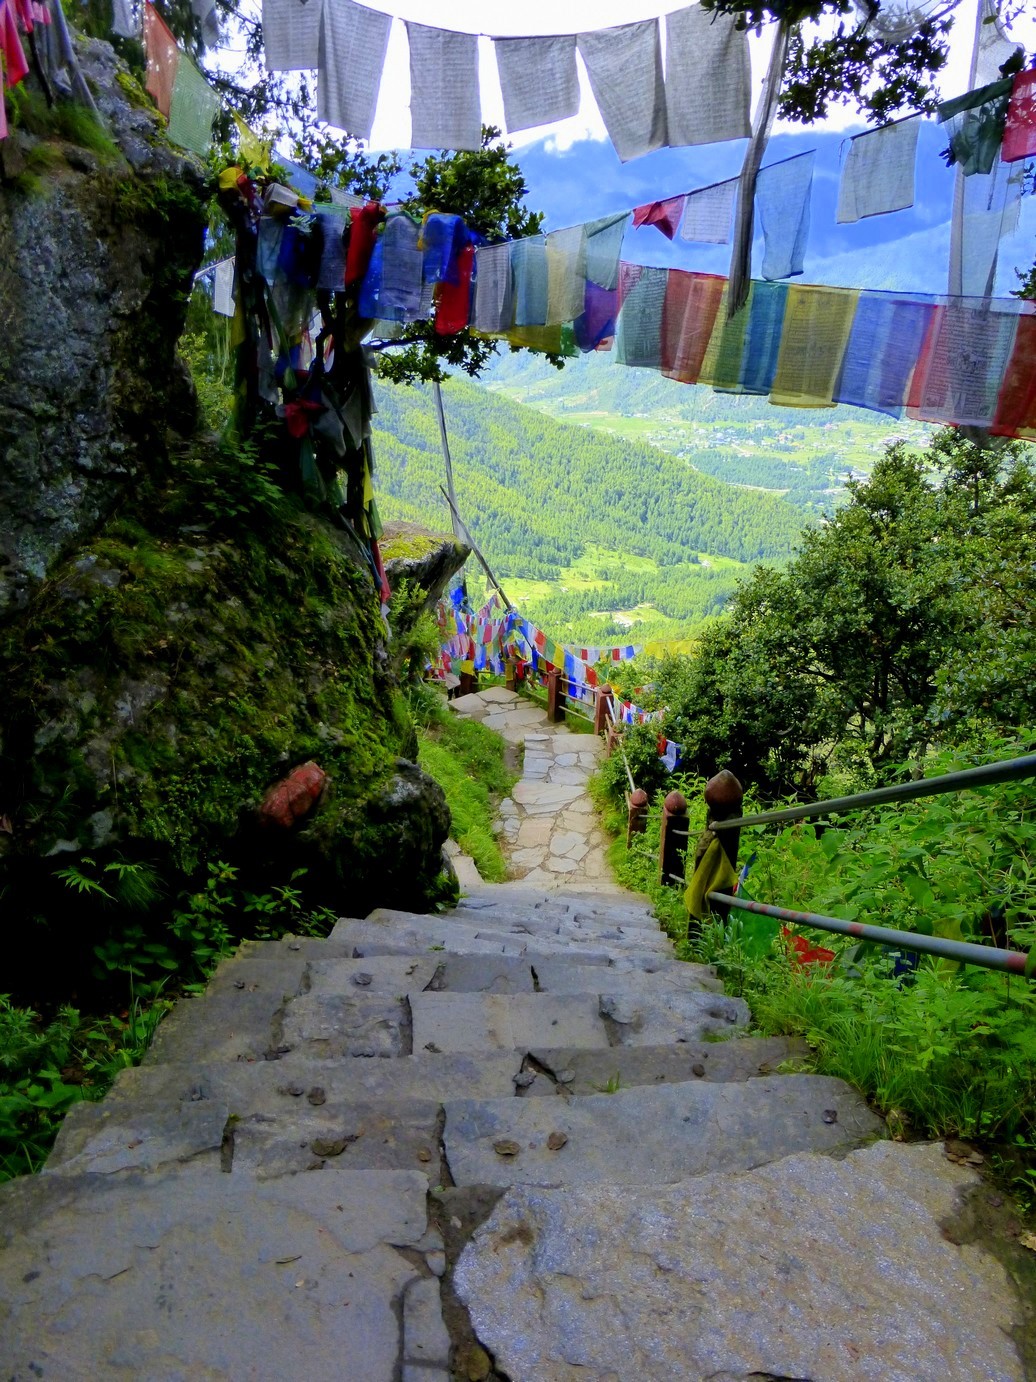 The most interesting day in Bhutan - My, Bhutan, Bhutan, Travels, Tourism, The photo, Hike, , Longpost